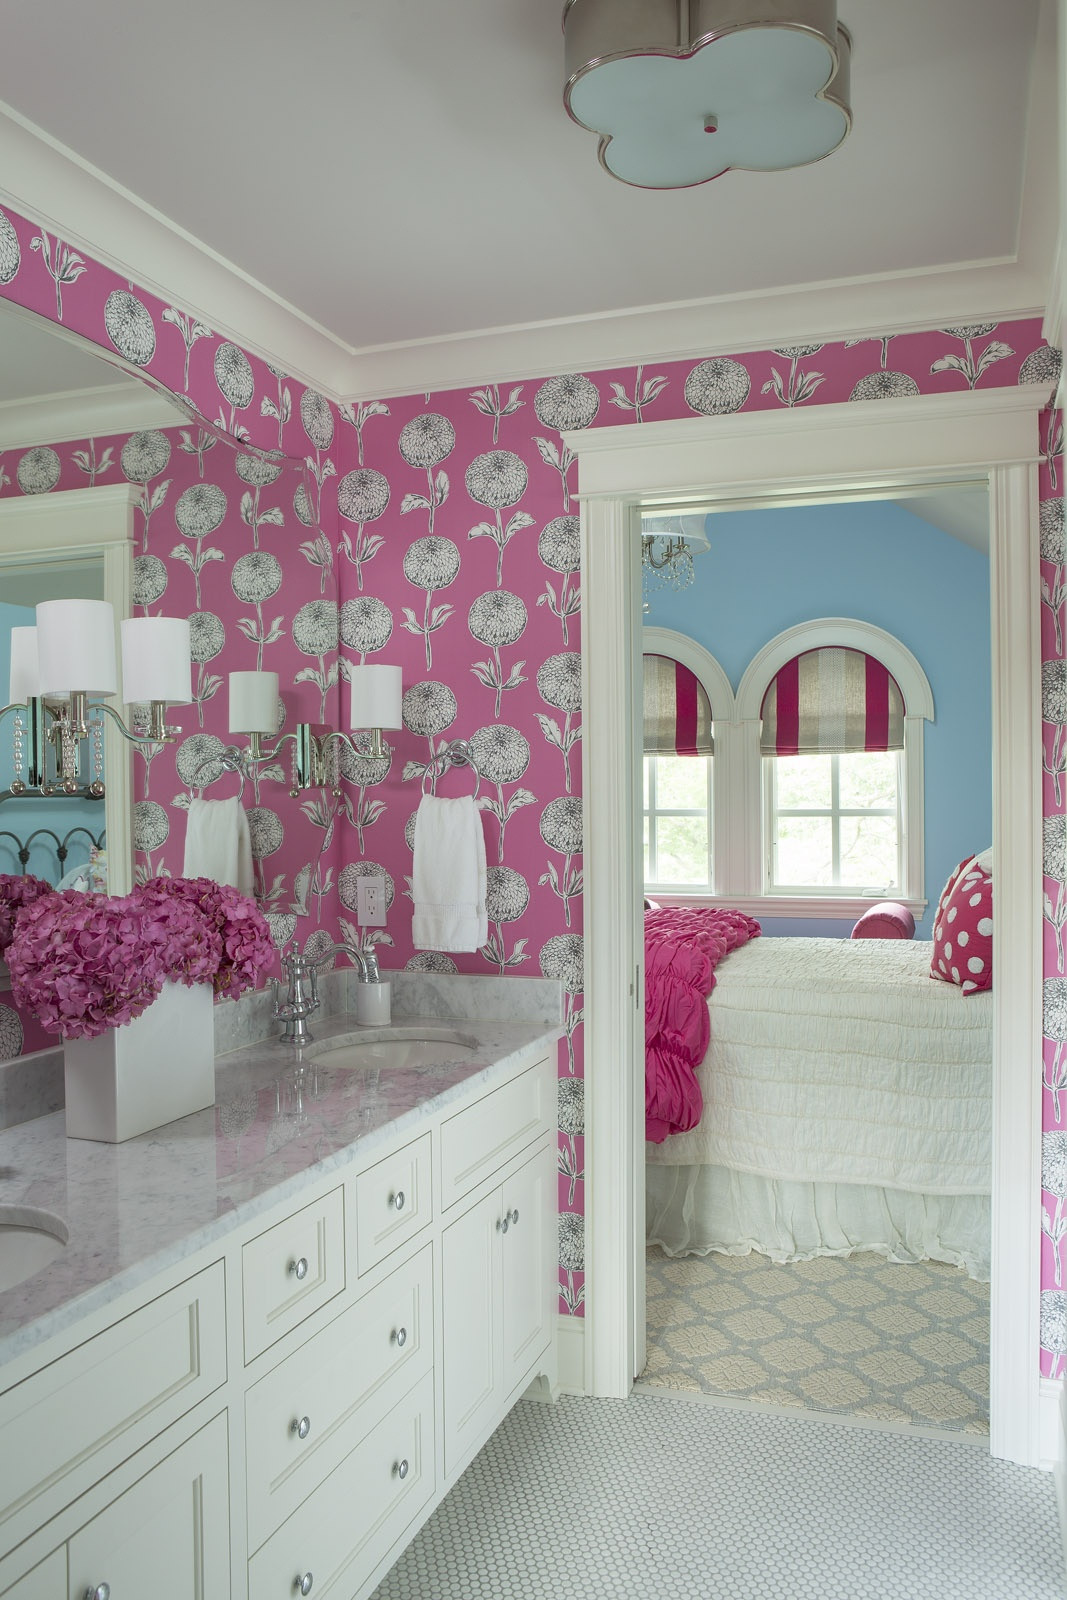 Girls Bathroom Decor
 15 Reasons To Love Bathroom Wallpaper